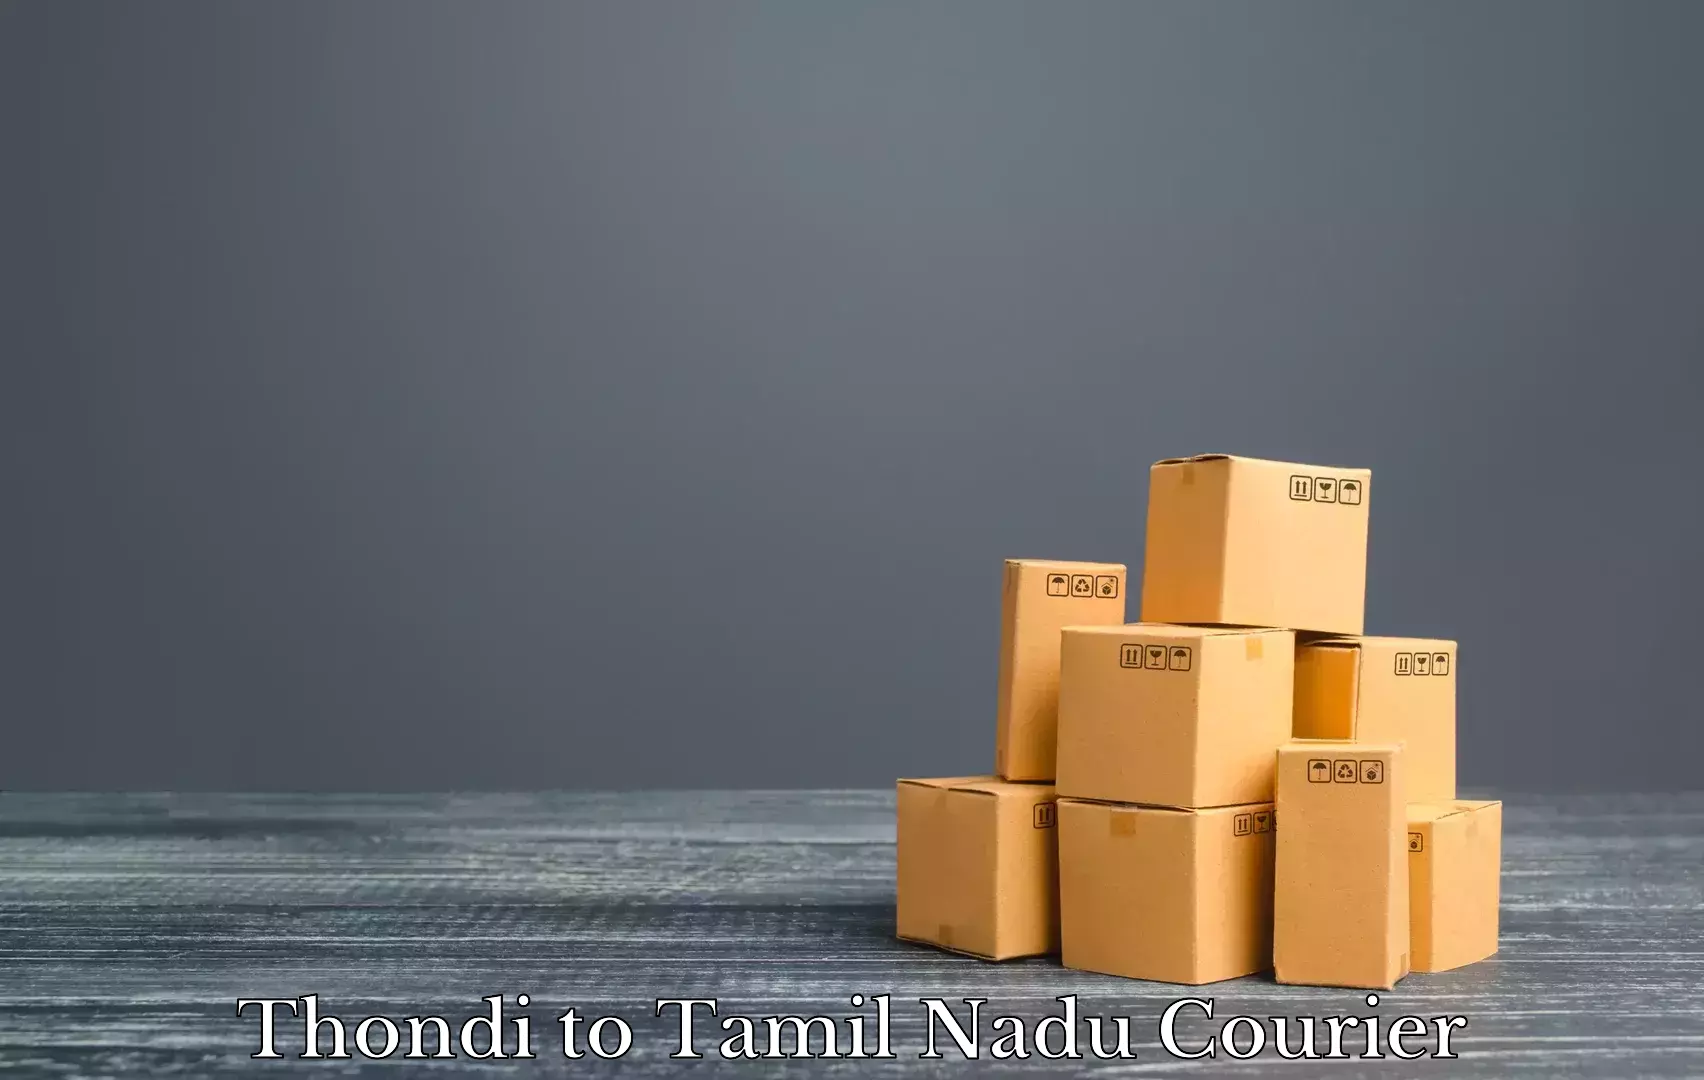 Professional moving company Thondi to Tamil Nadu